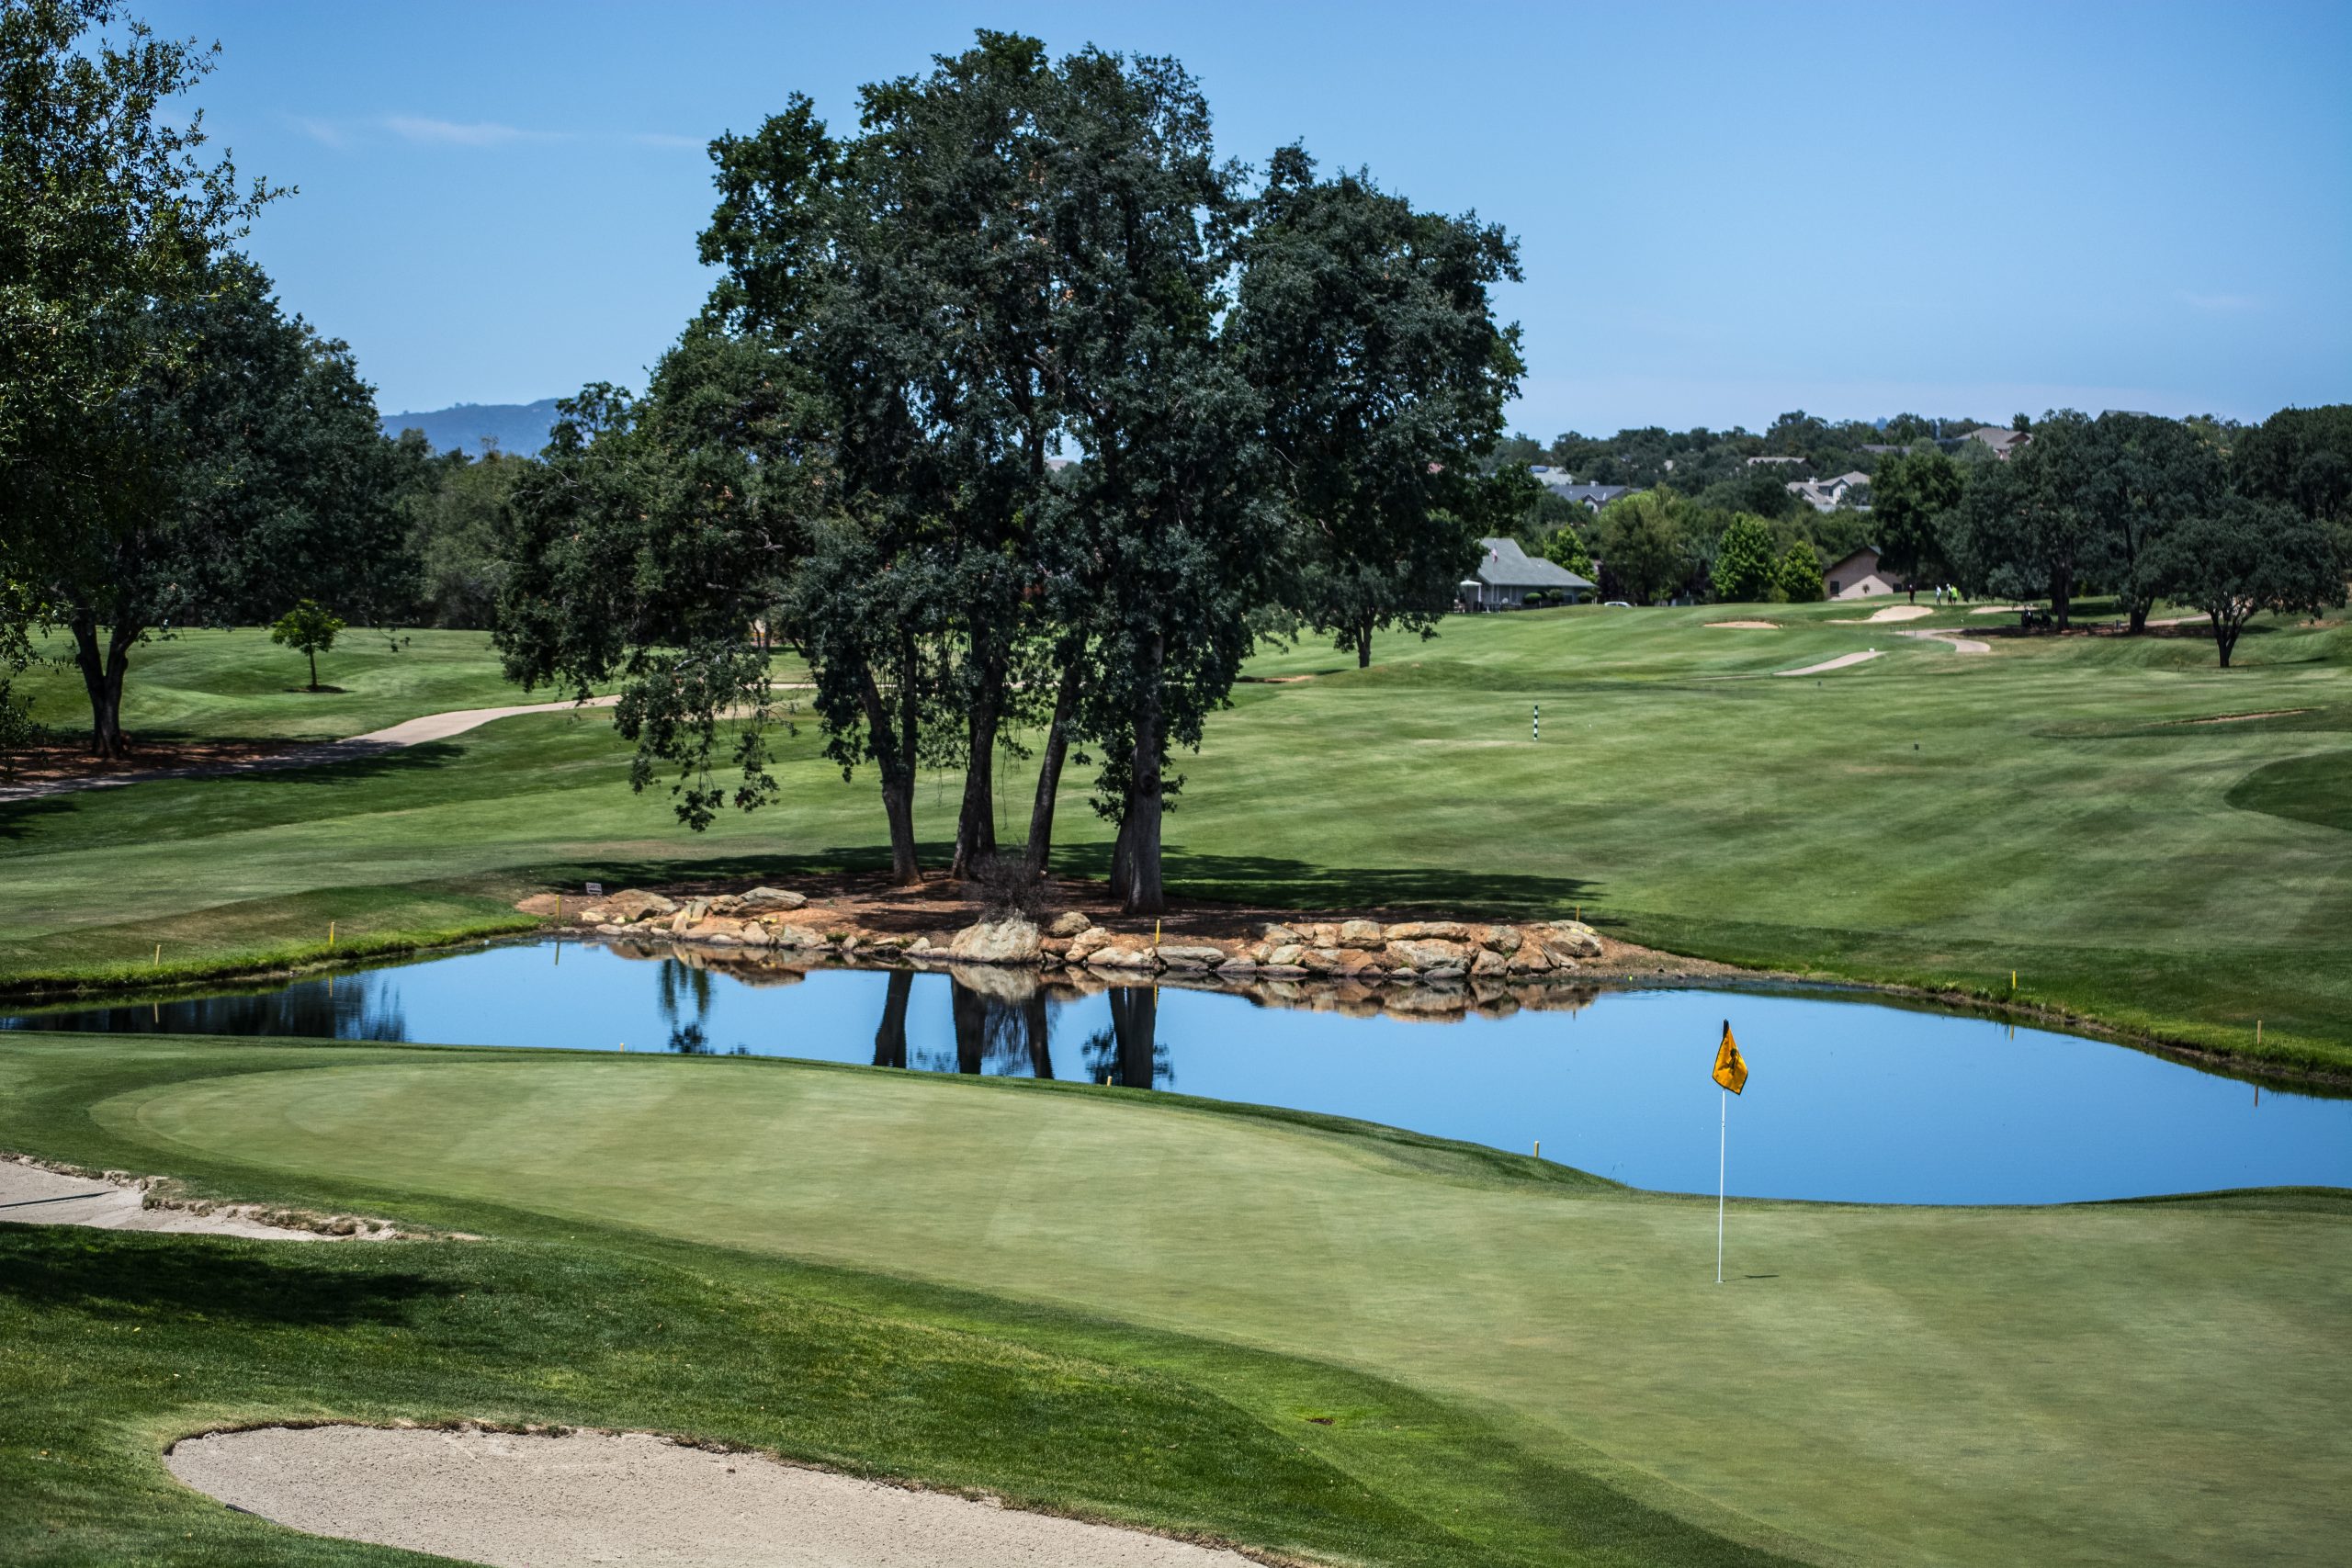 Commercial Landscape Lighting Tips for Golf Courses